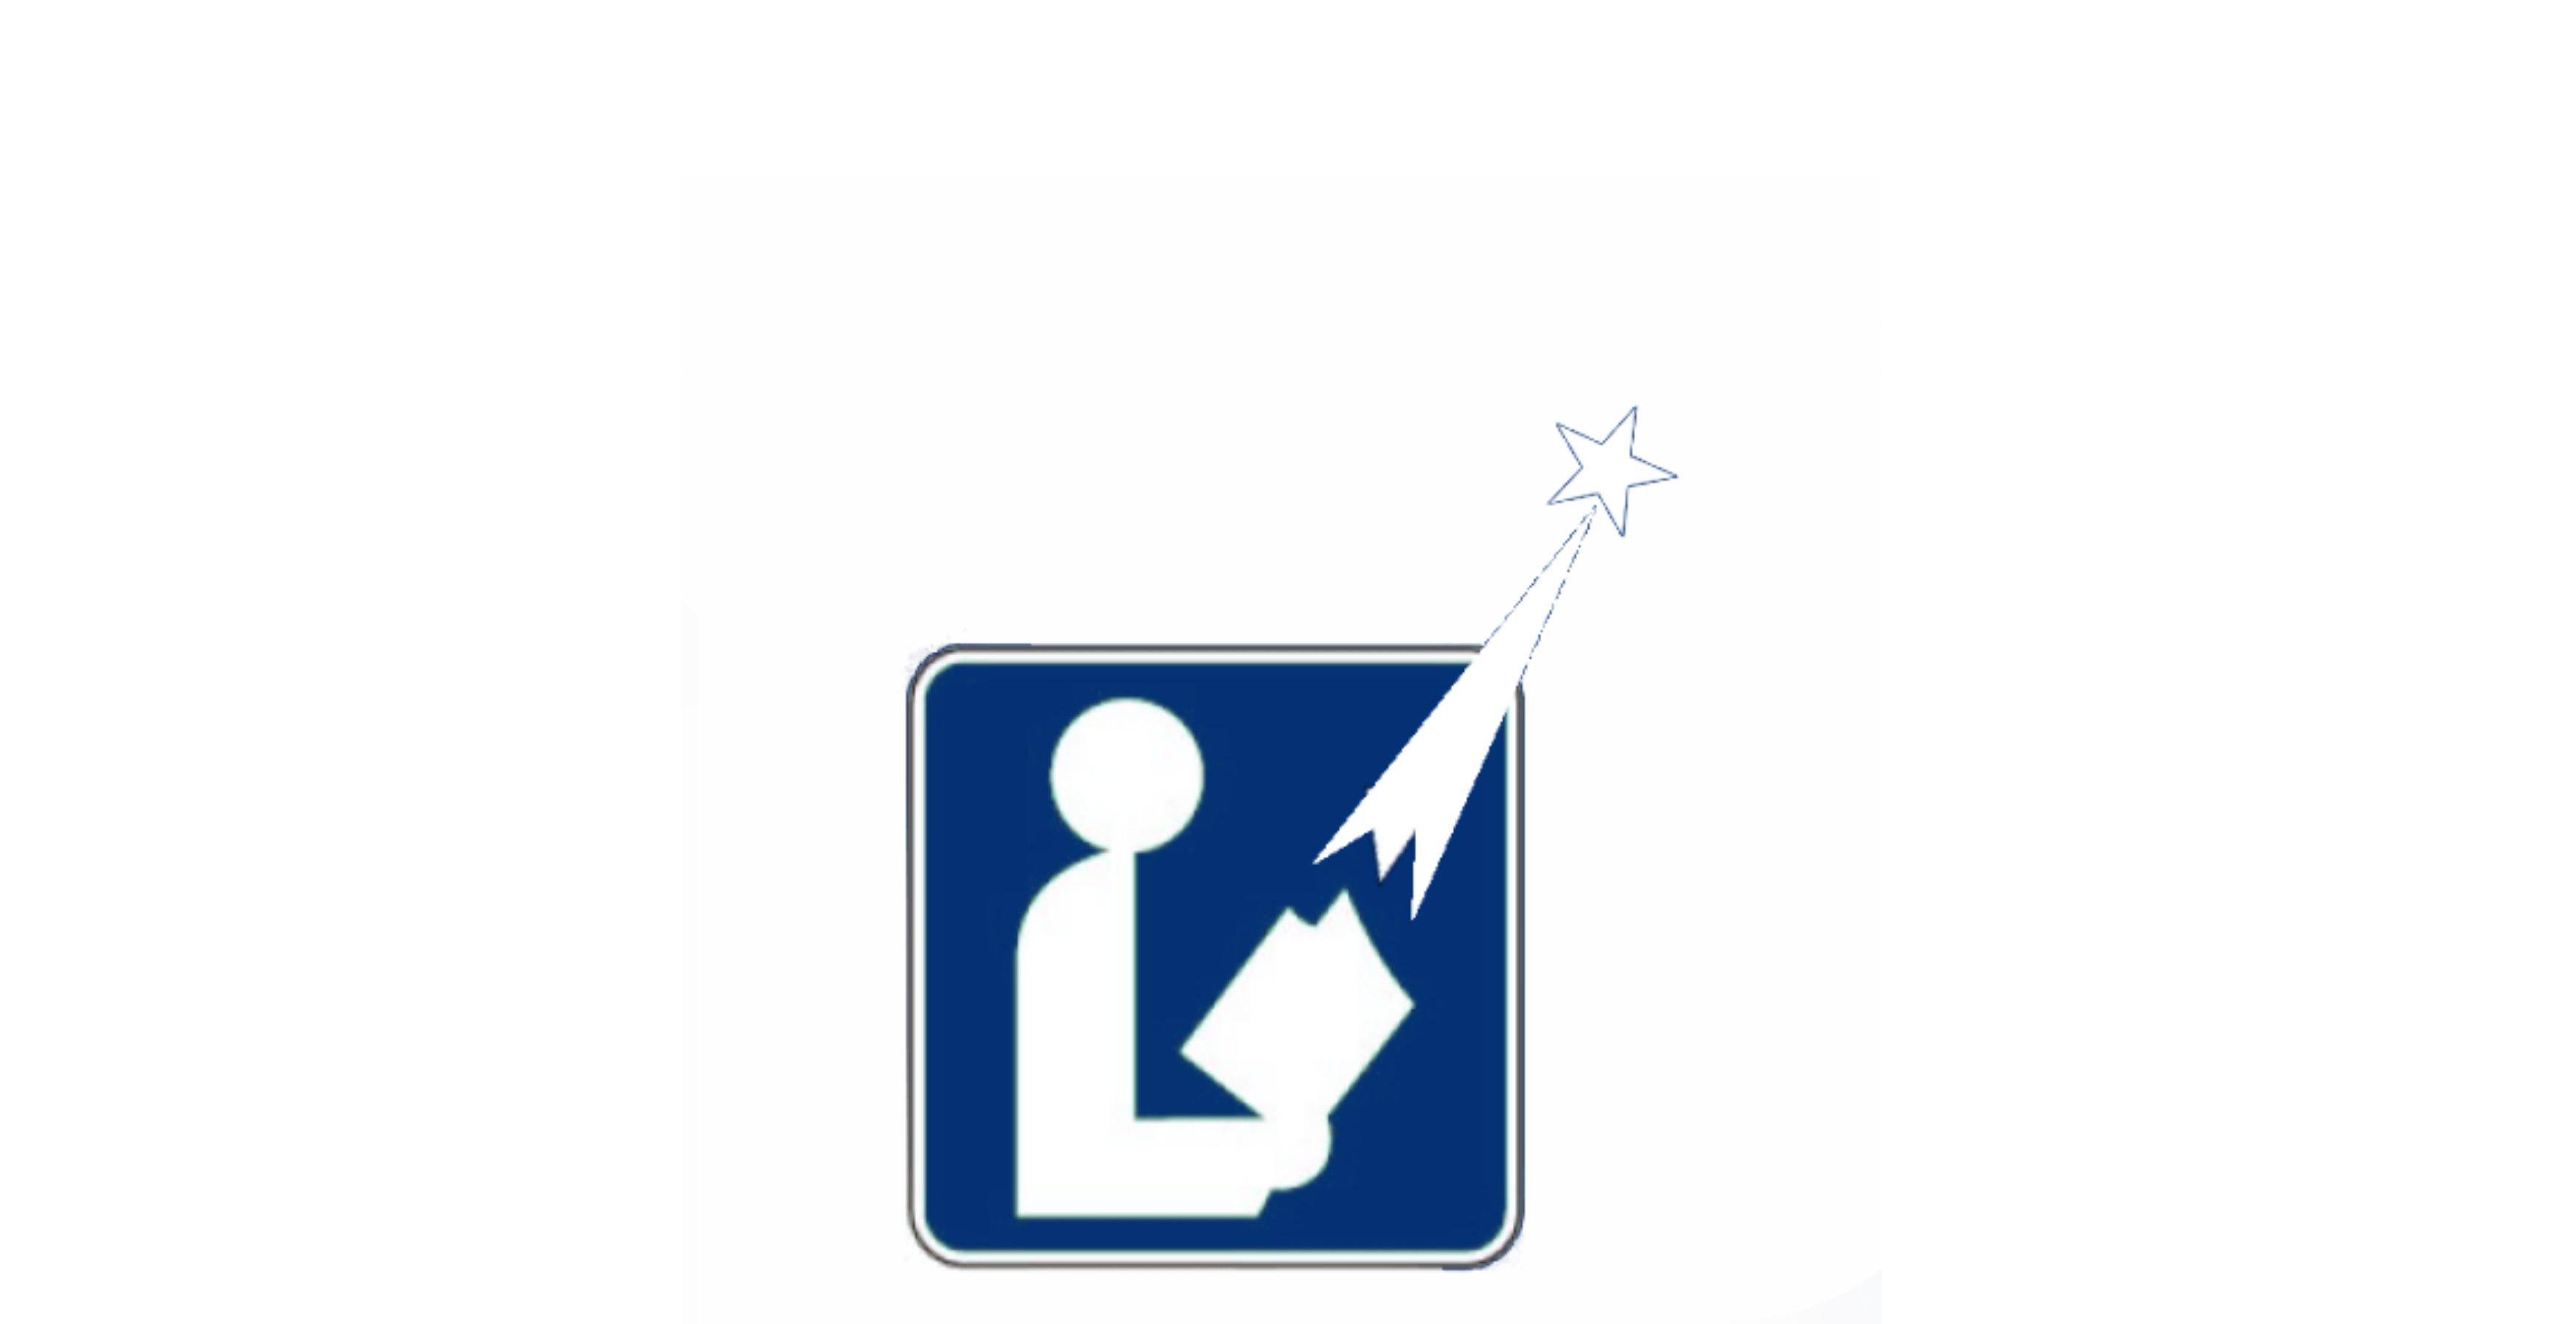 Upper Chichester Library